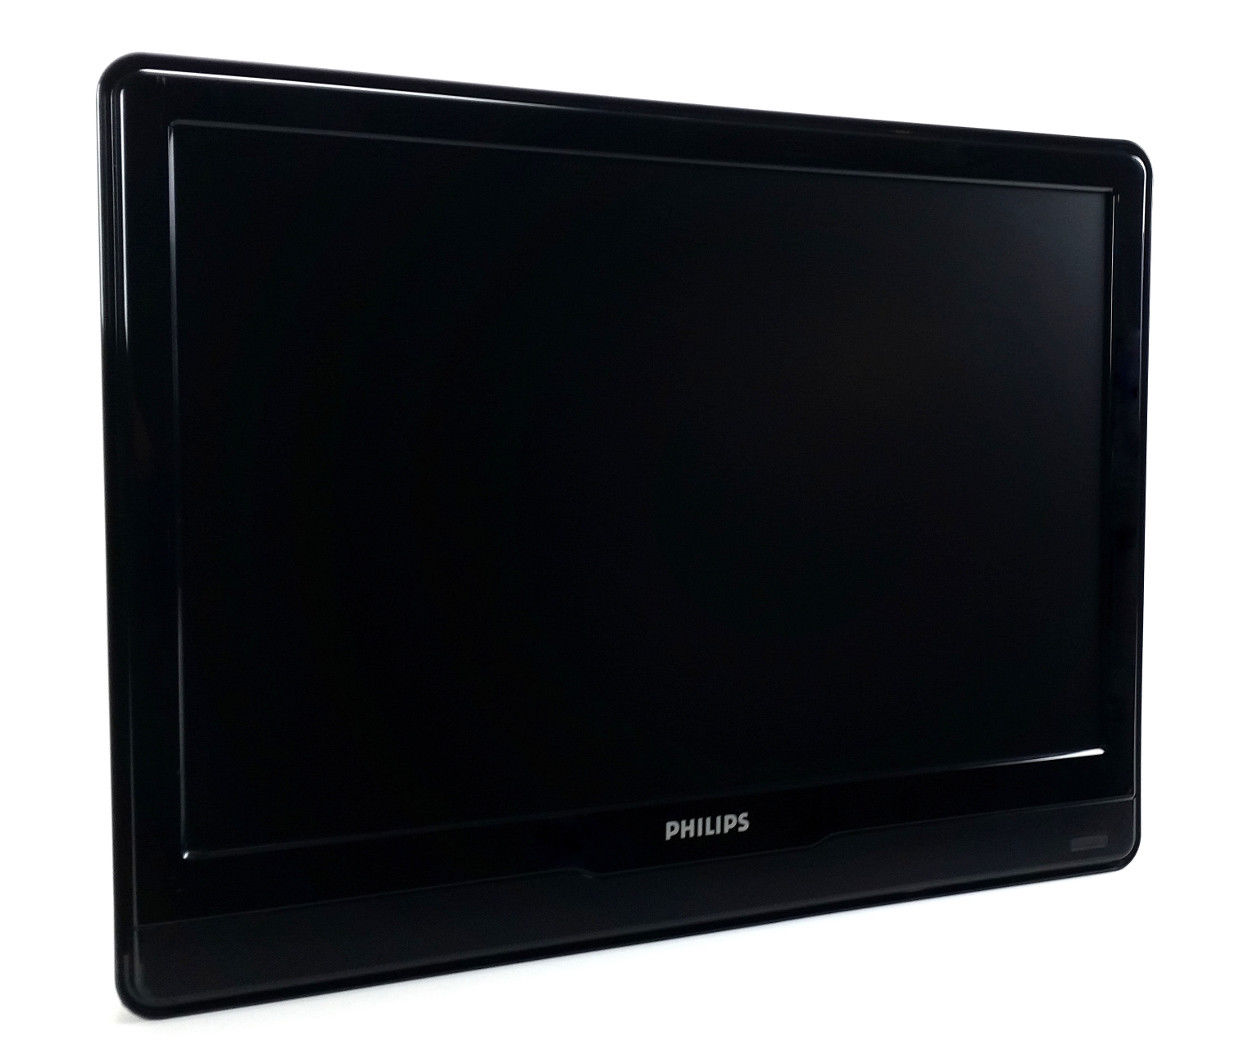 PHILIPS Flachbild TV 56cm (22 Zoll)  LCD TV mit DVB-T HDMI  SCART  22HFL3330D